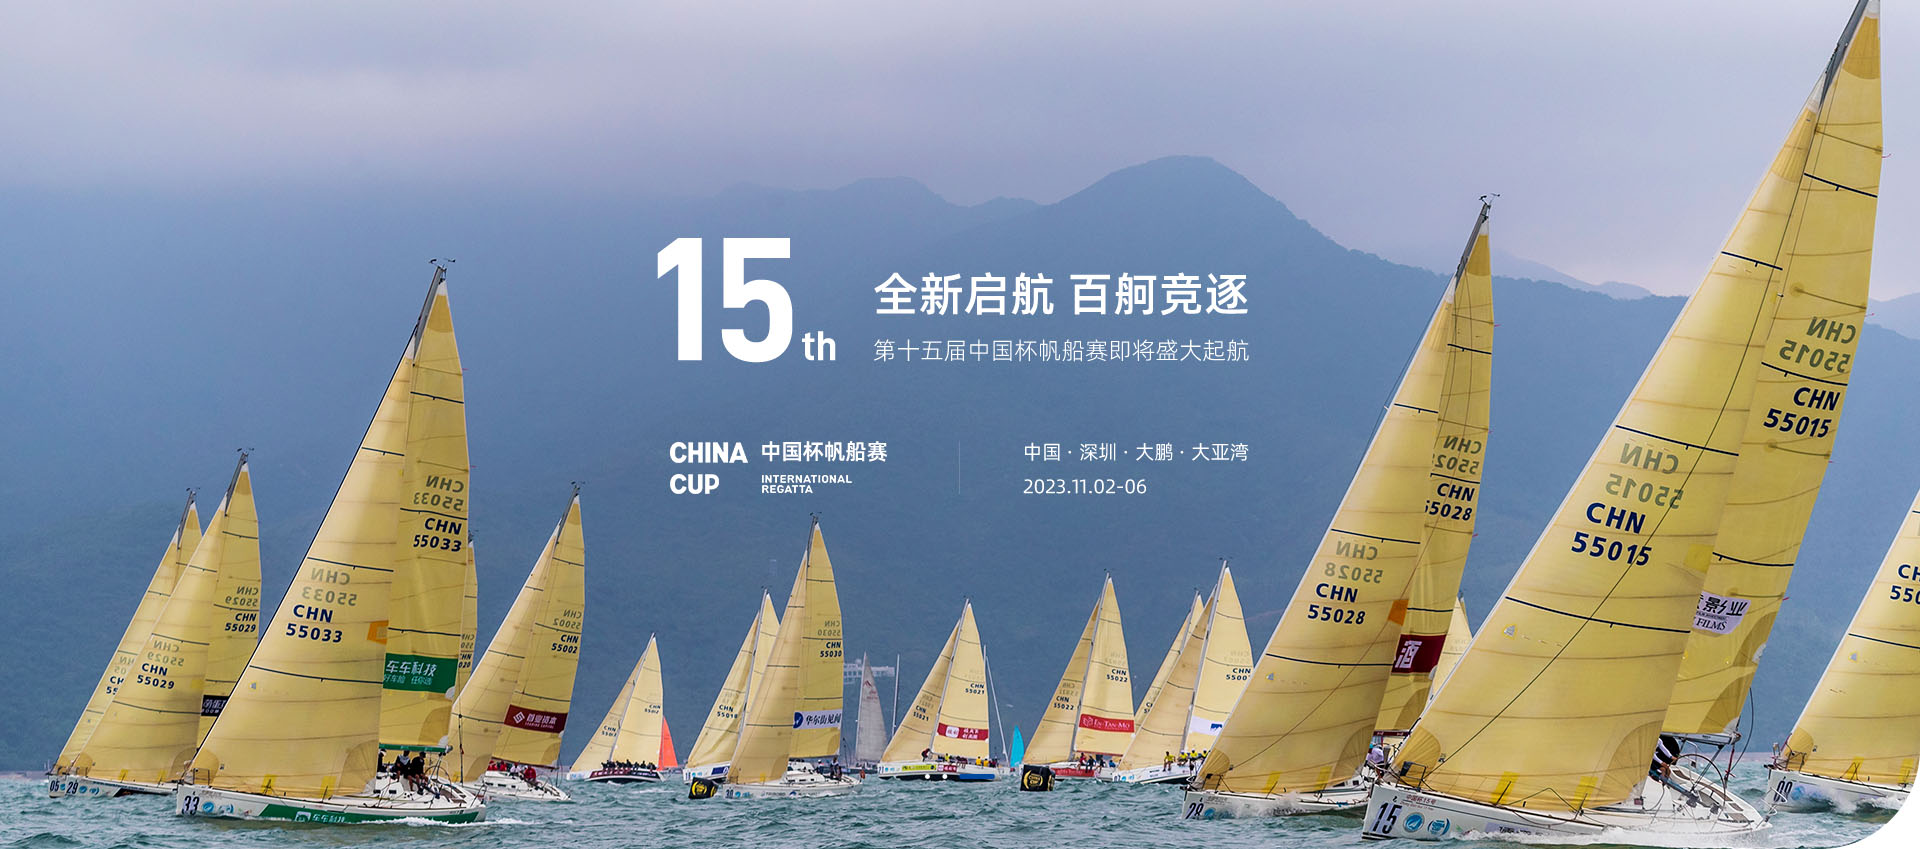 China Cup Sailing Race